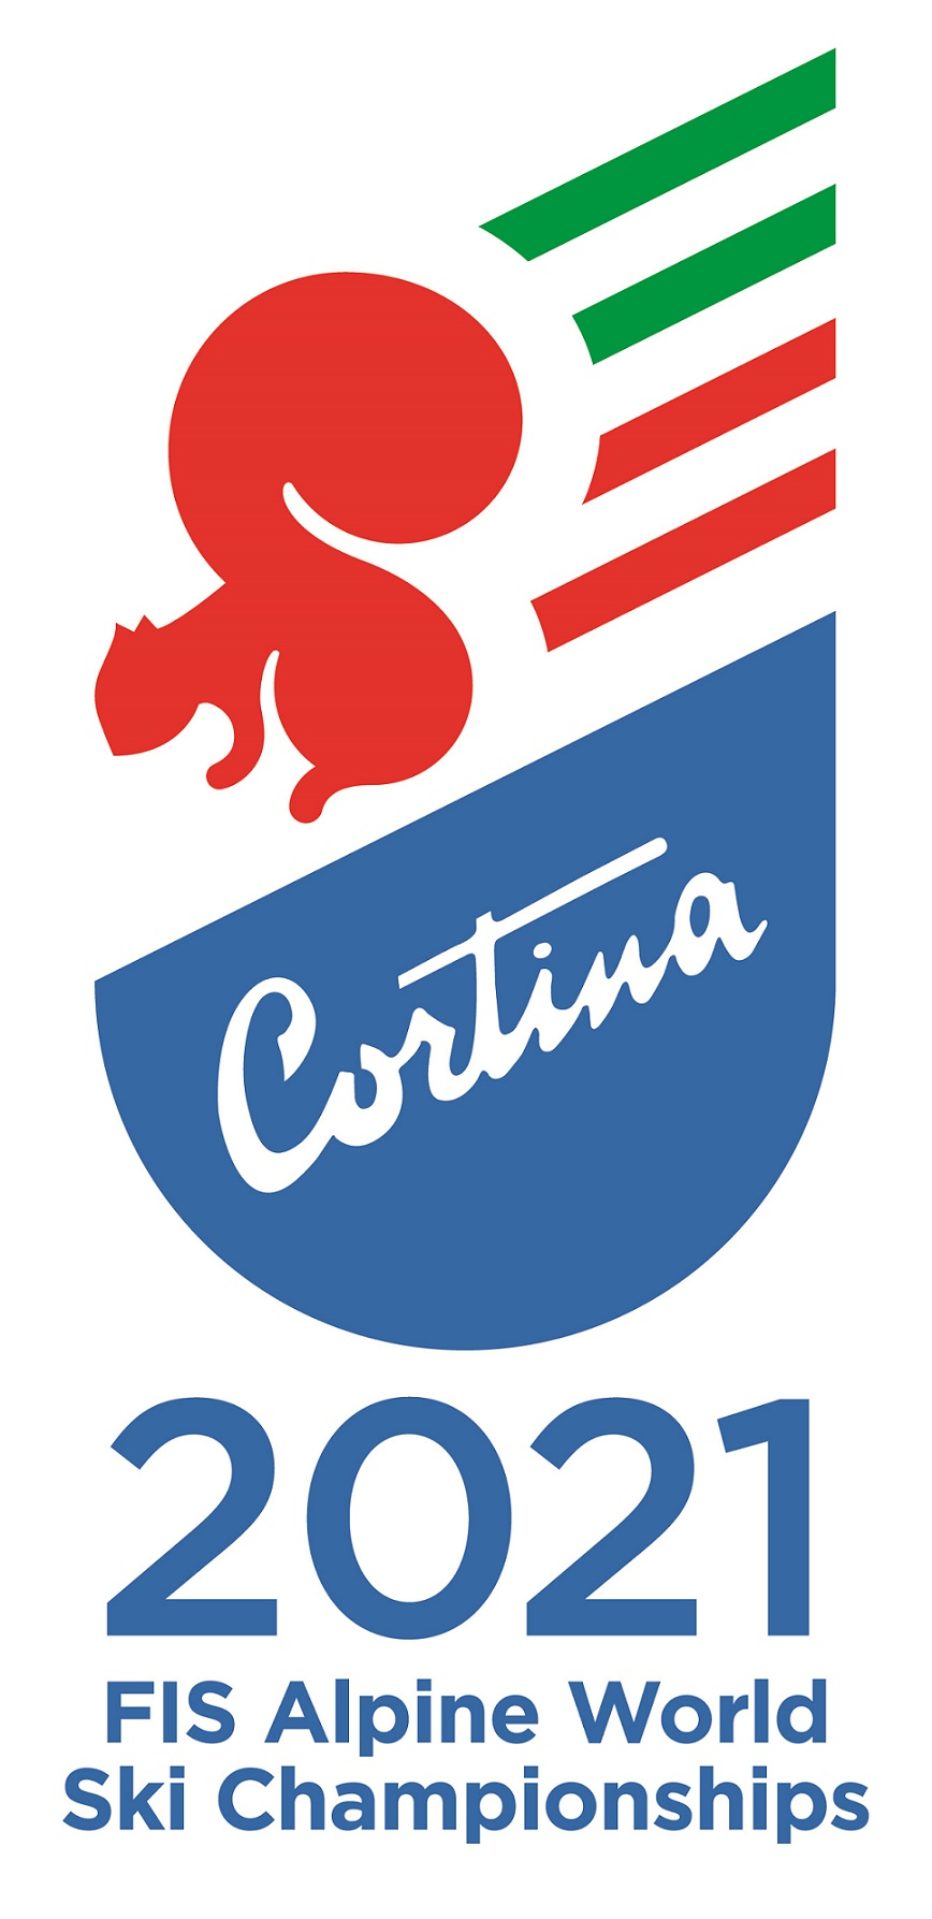 Cortina 2021 incontra la Fédération Internationale de Ski: Martedì 19 e Mercoledì 20 giugno al via il 4° Coordination Meeting